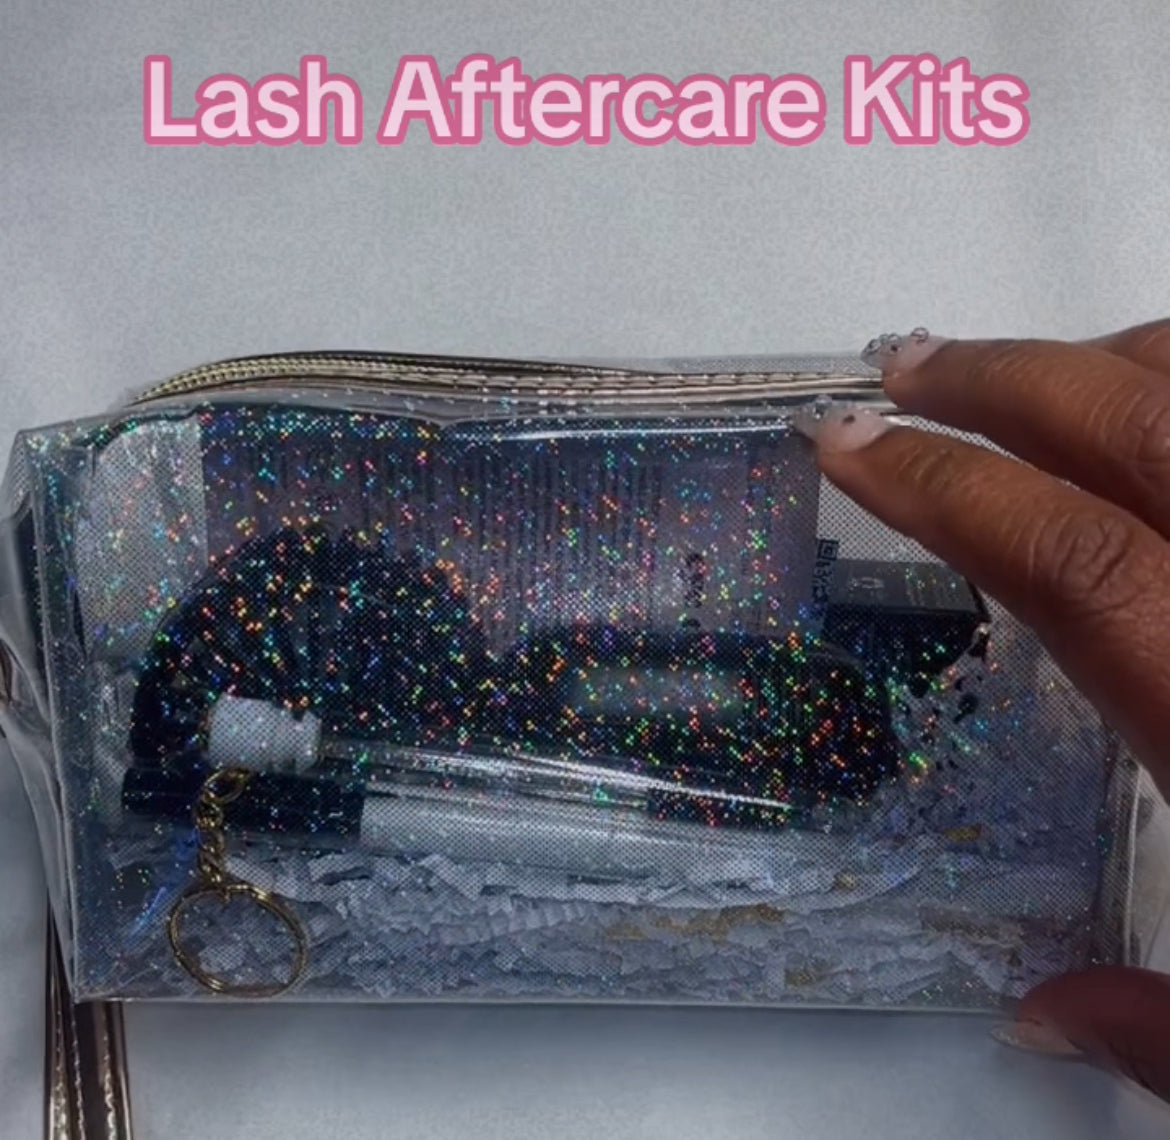 Lash AfterCare Kits